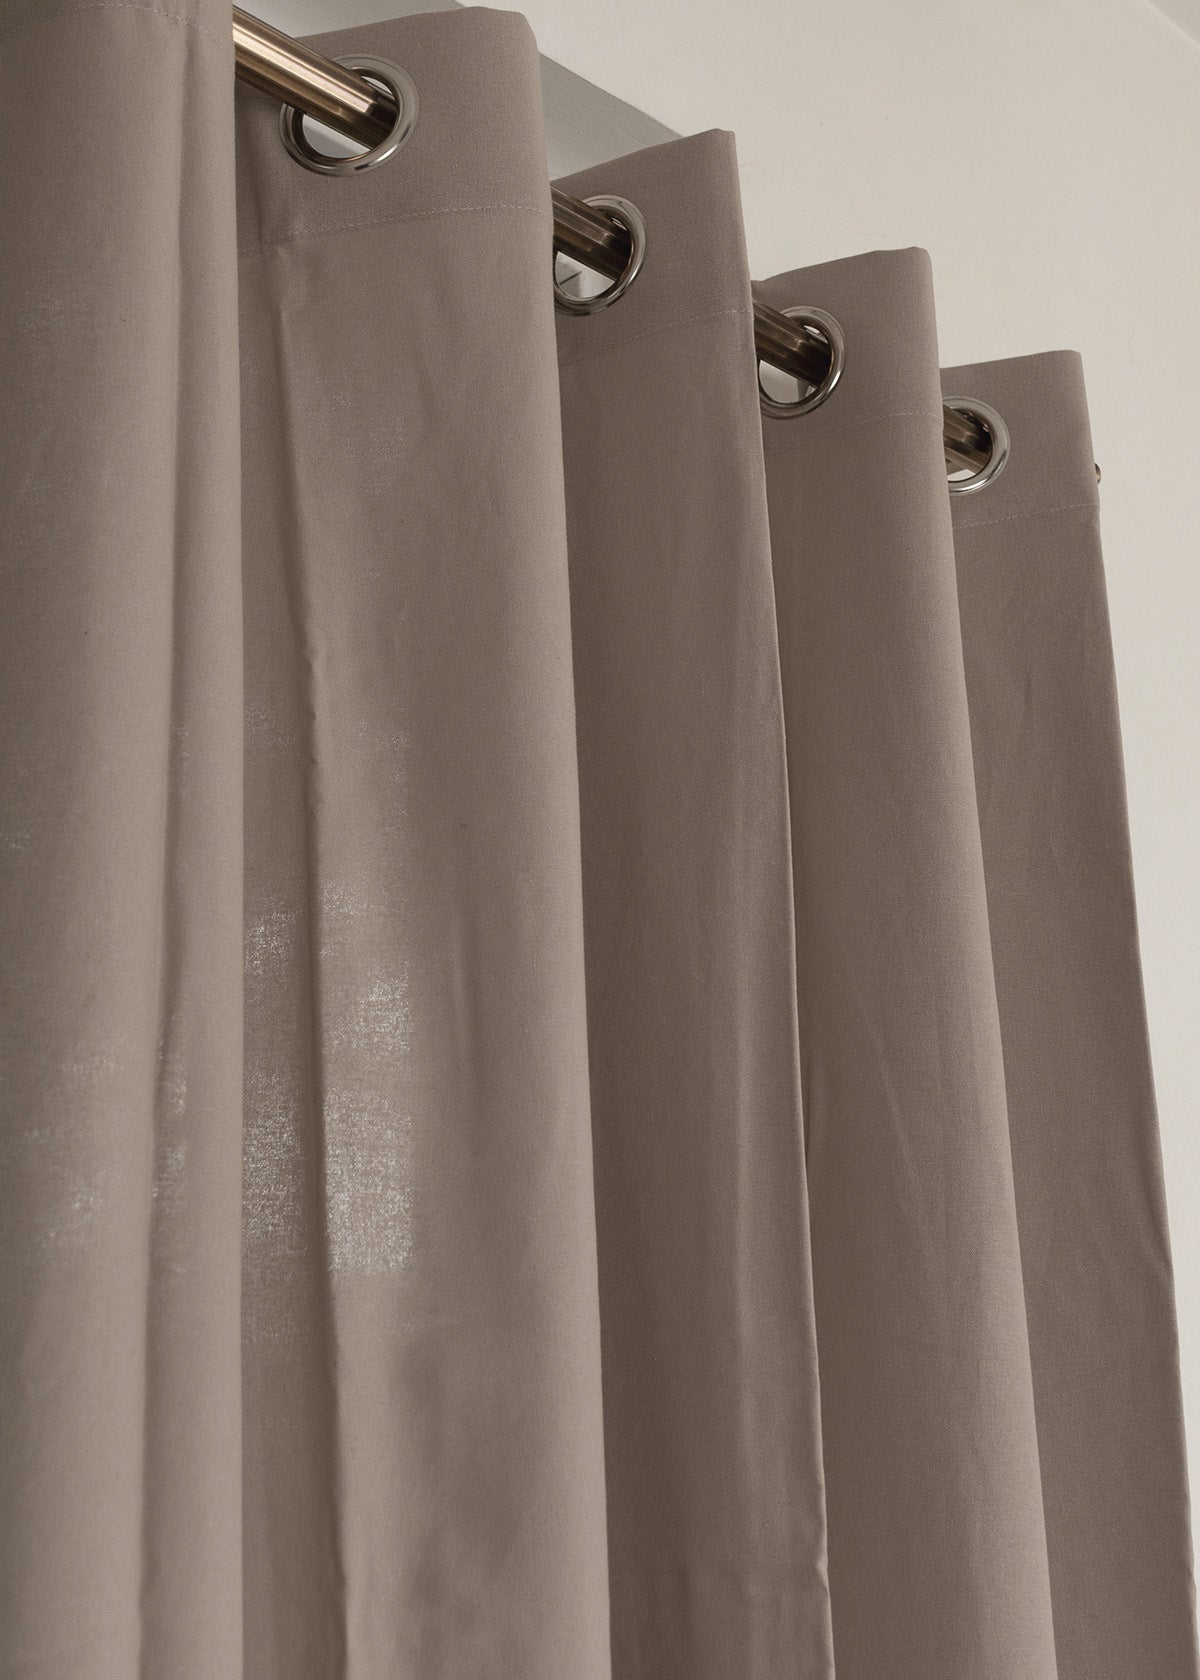 Solid Walnut grey 100% Customizable Cotton plain curtain for bedroom - Room darkening